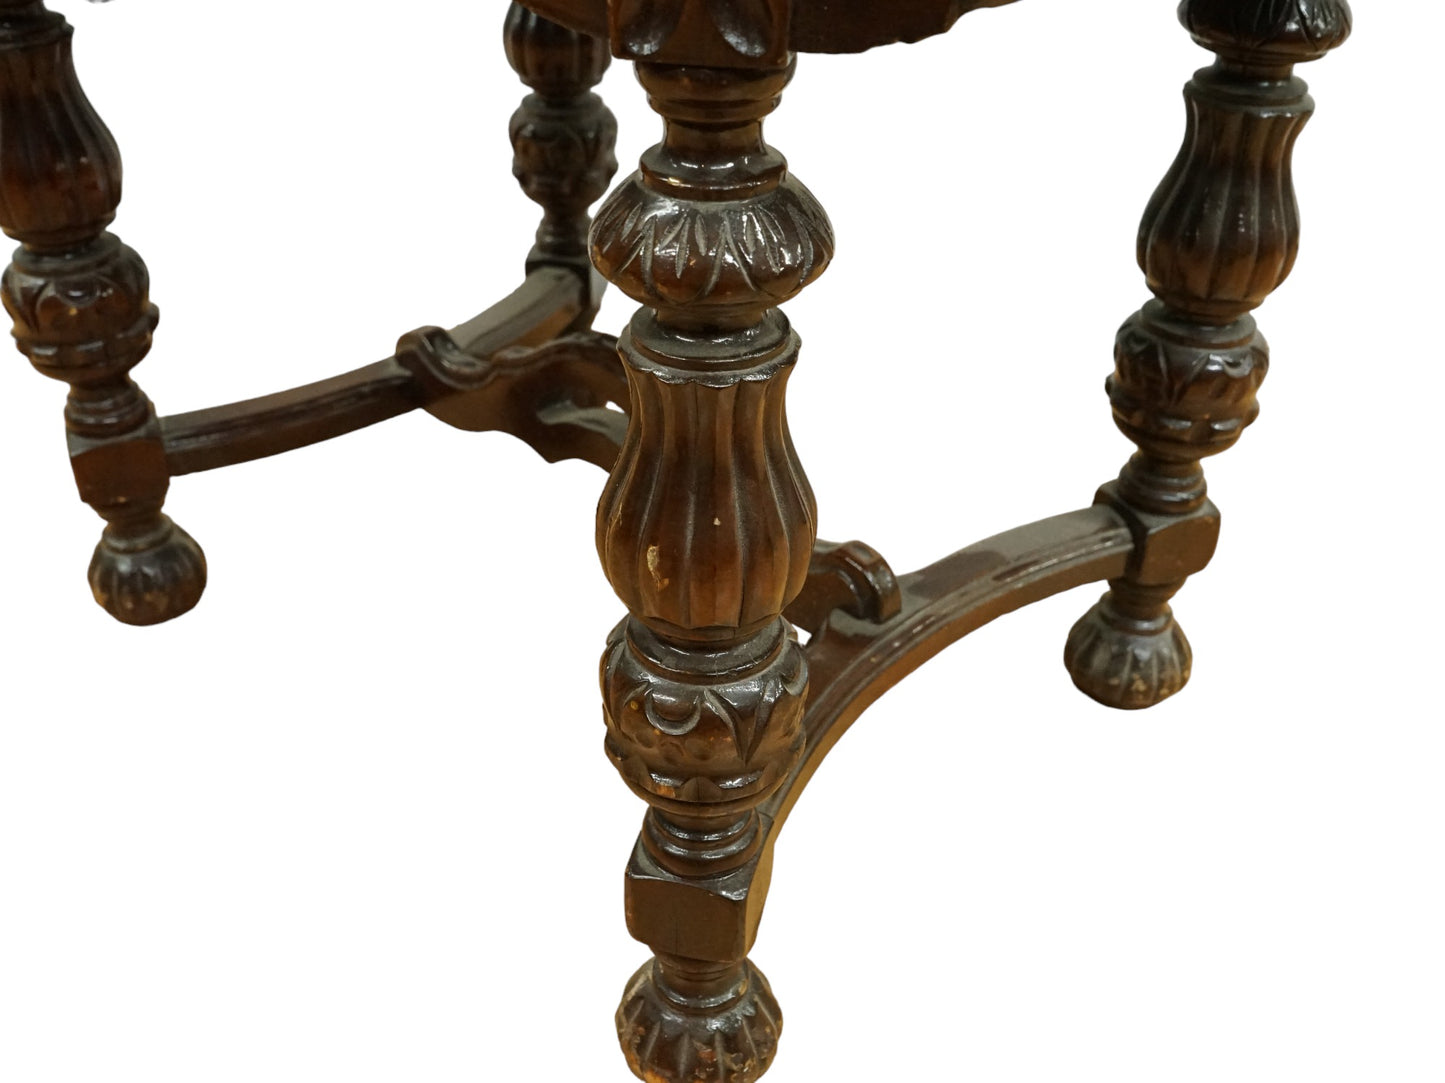 Fine French Renaissance style Revival Oval Oak Table